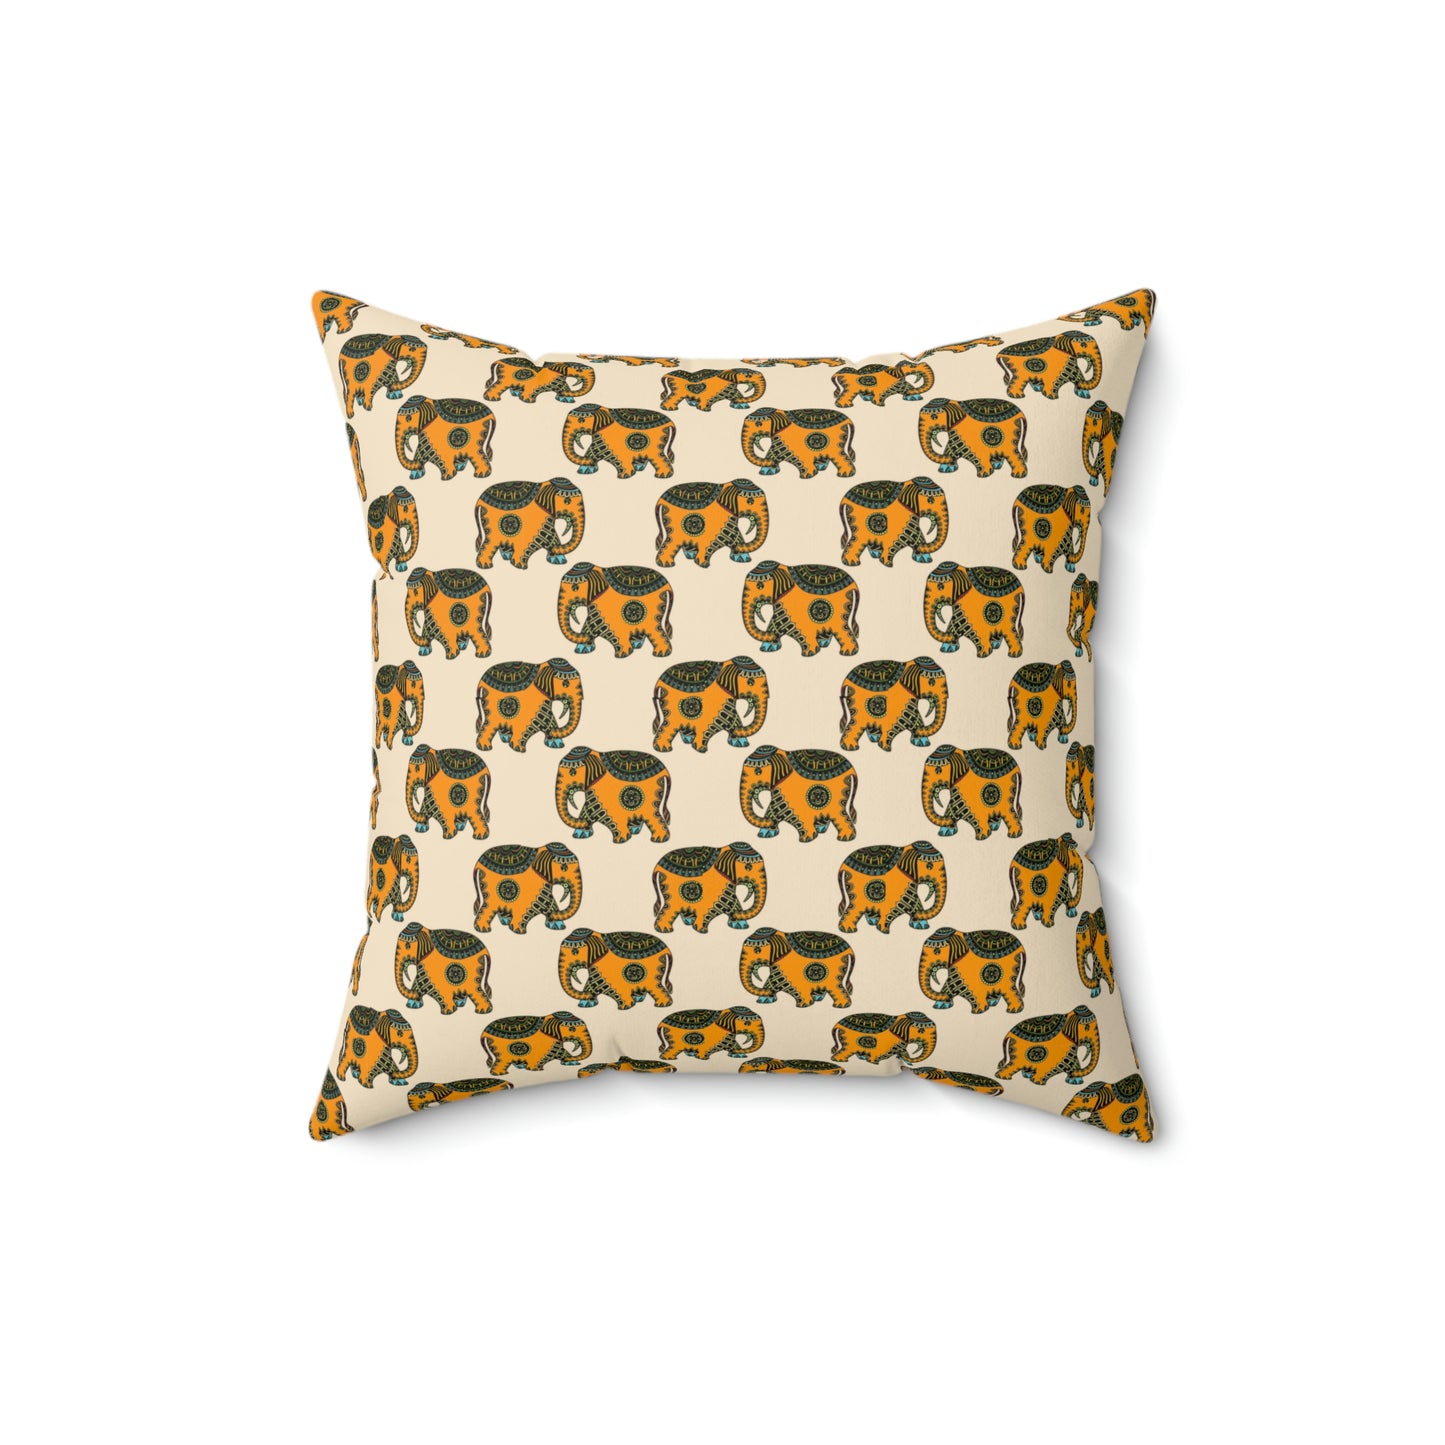 Bohemian Elephant pillow cover